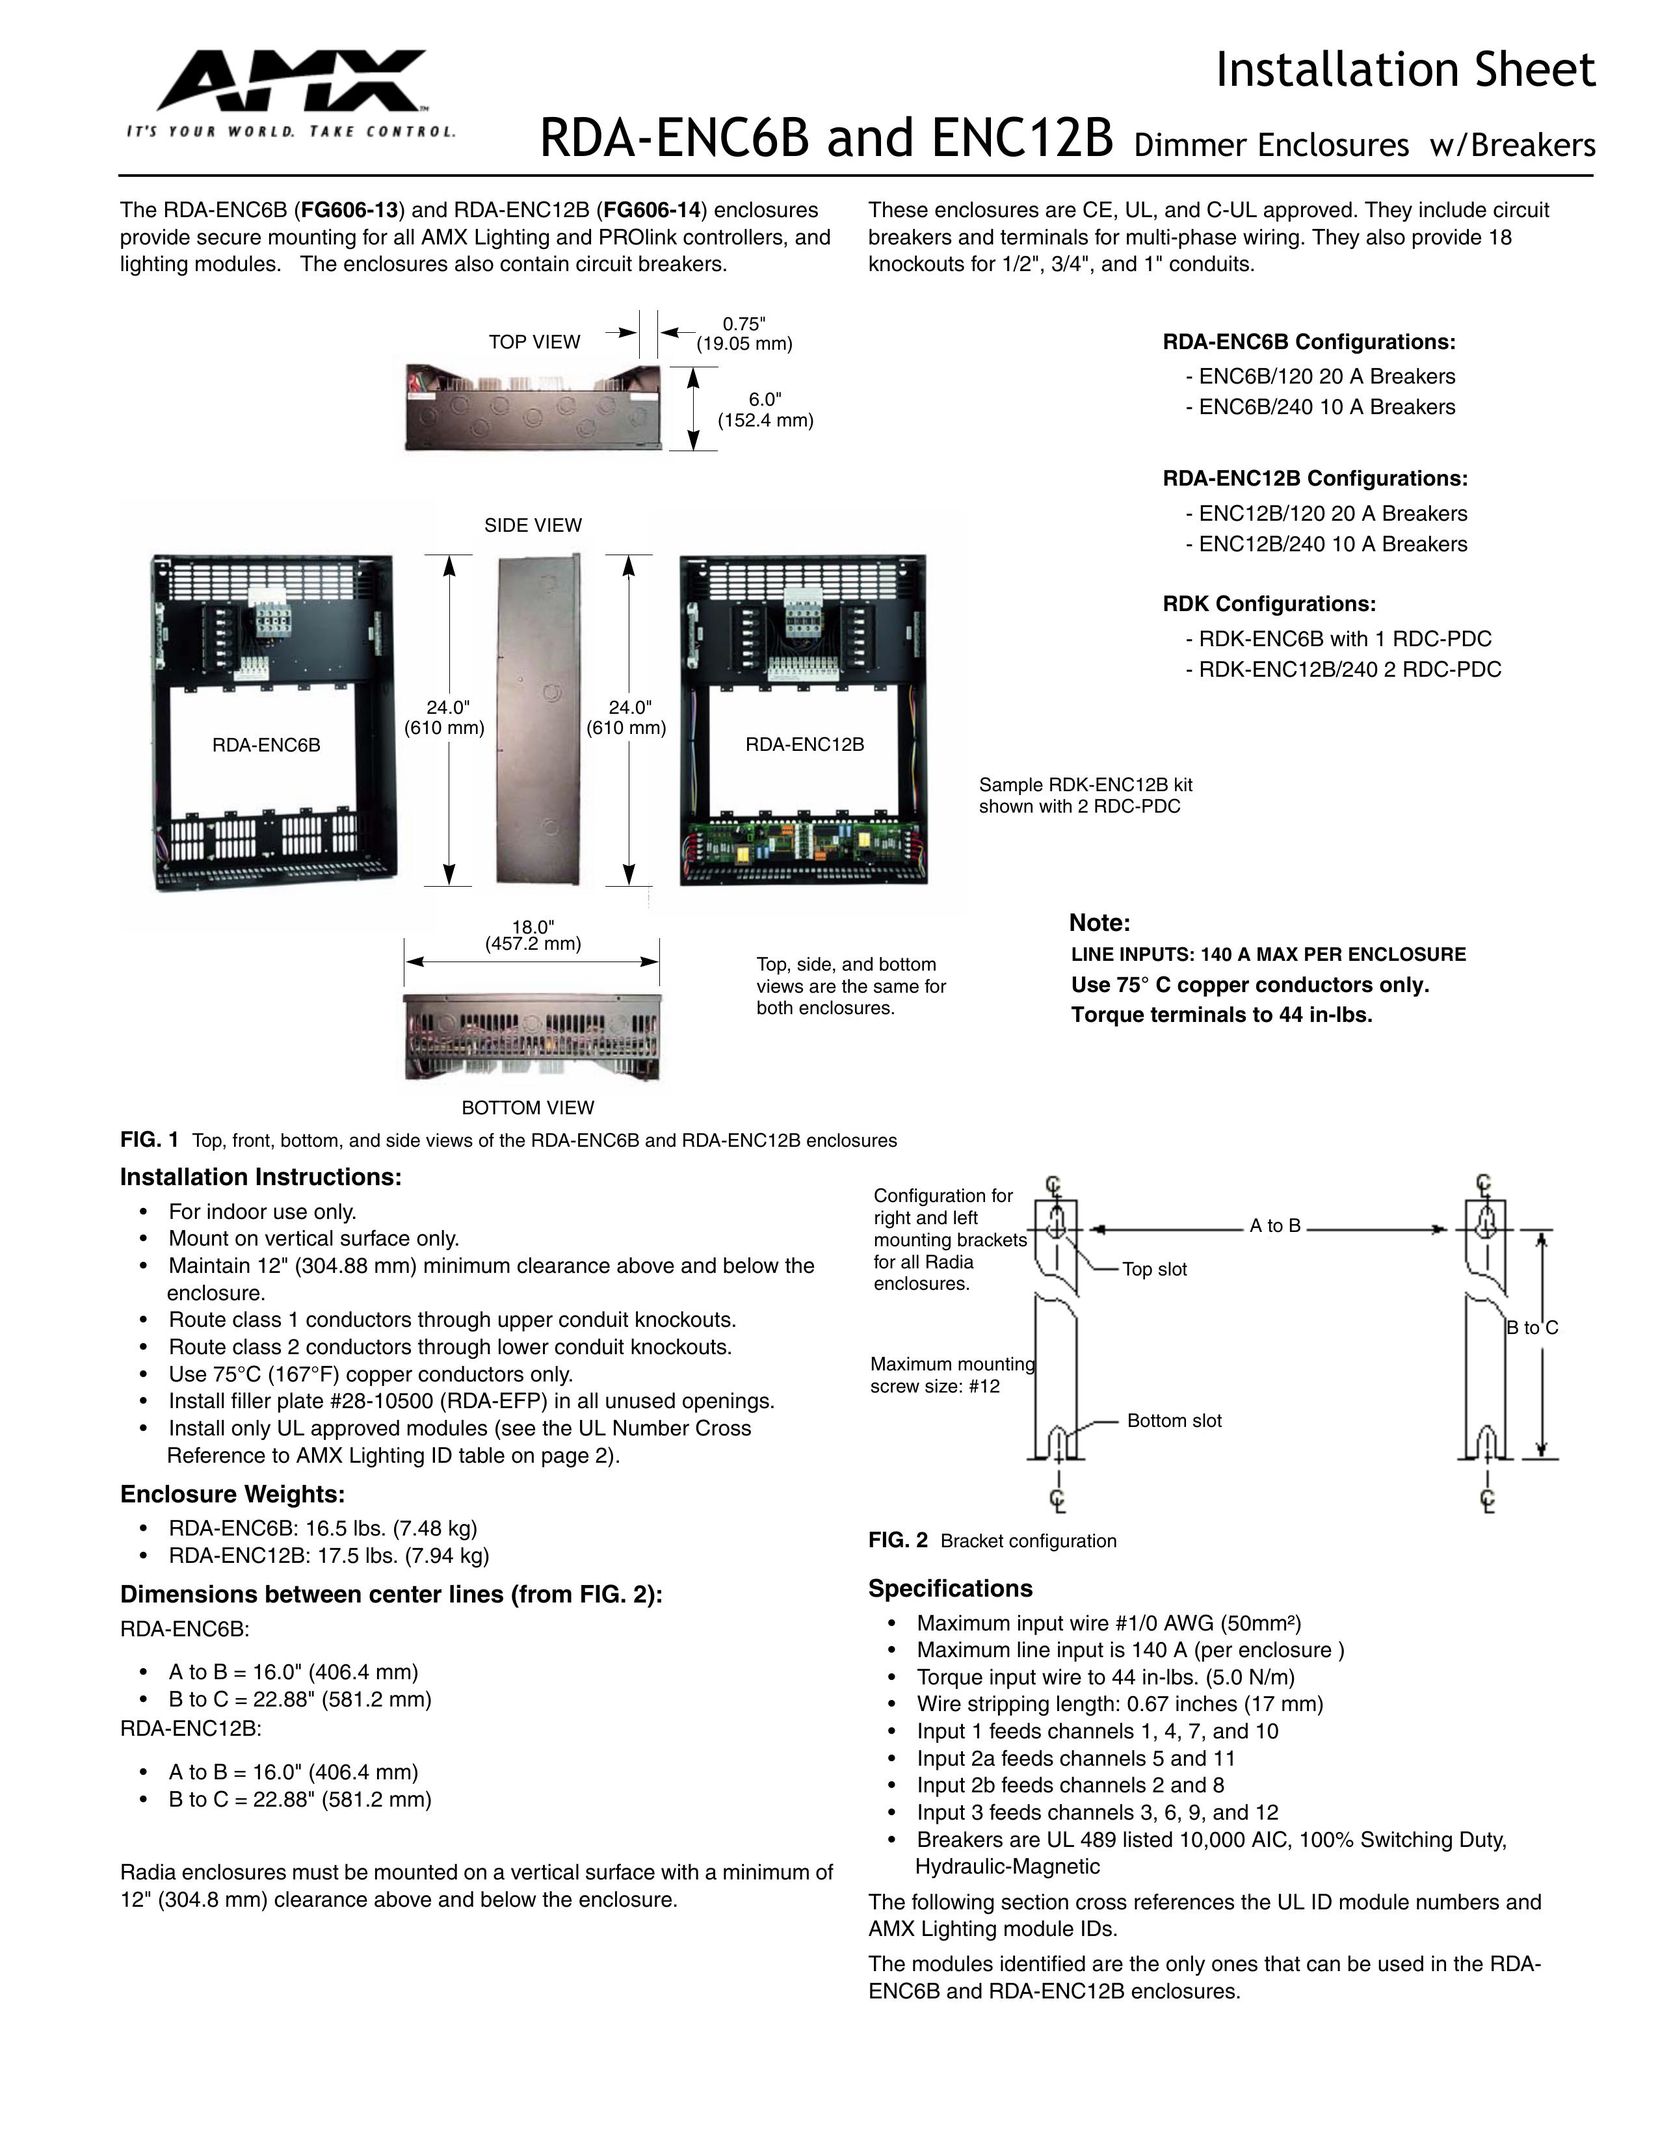 AMX ENC12B Indoor Furnishings User Manual